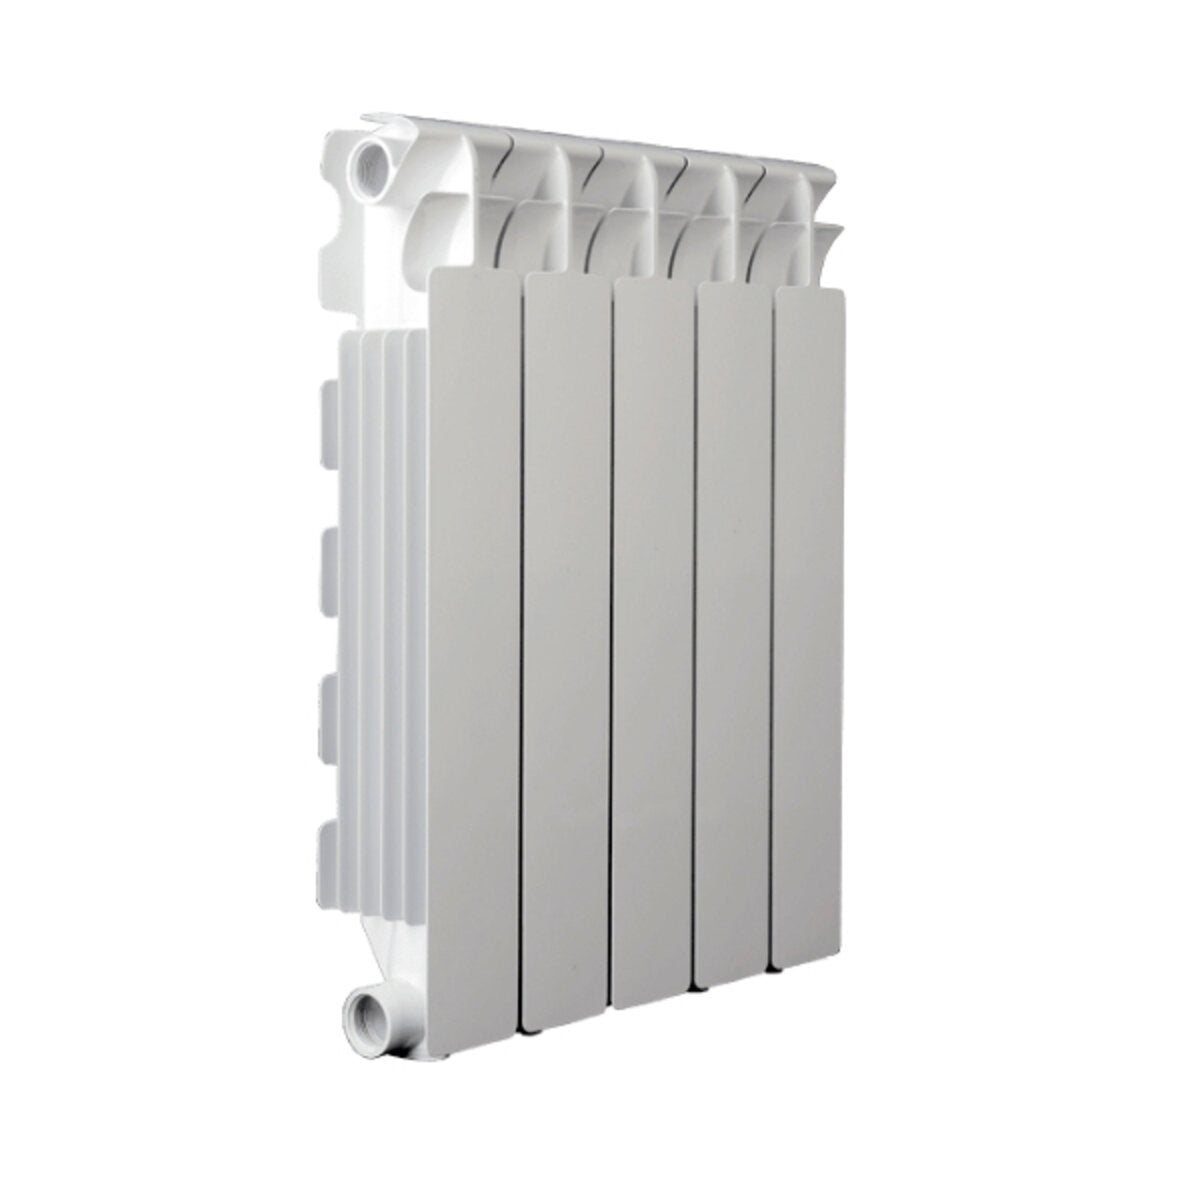 Fondital radiator in die-cast aluminum calidor super b4 5 elements center distance 350 mm